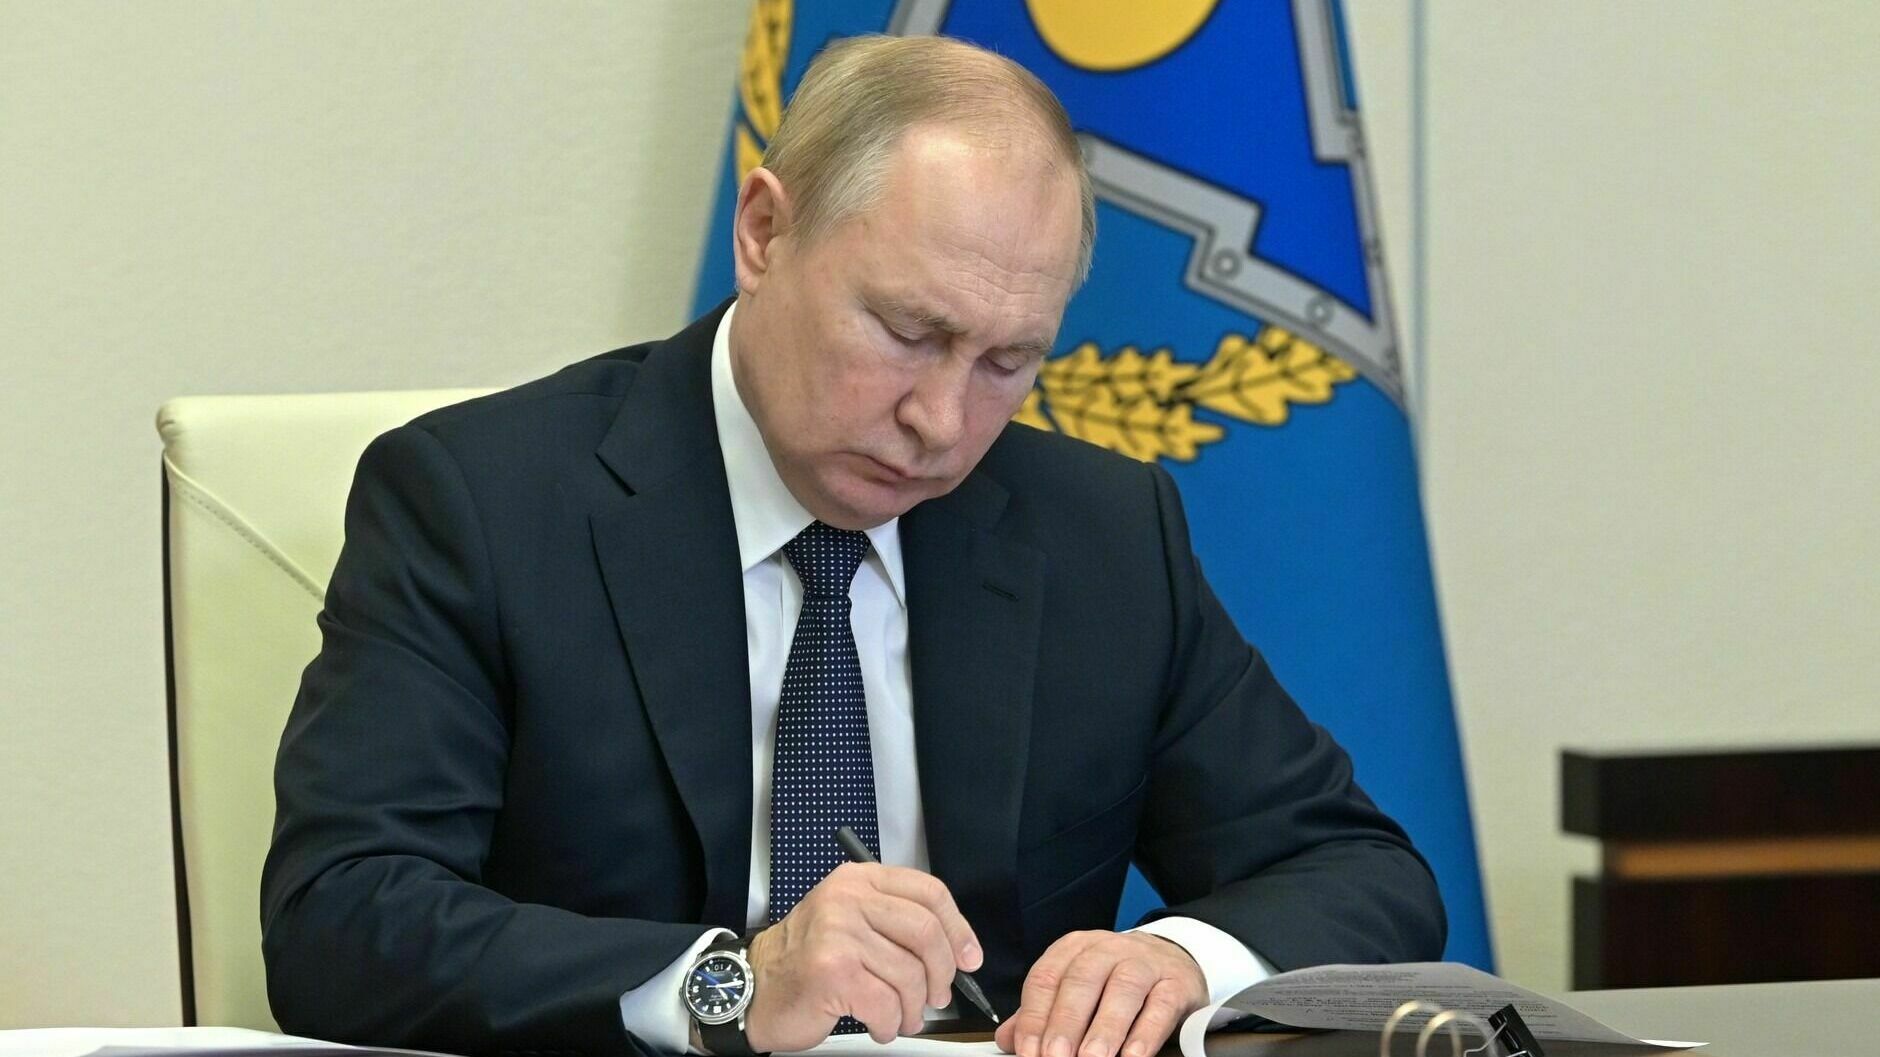 Putin terminated the Council of Europe treaties